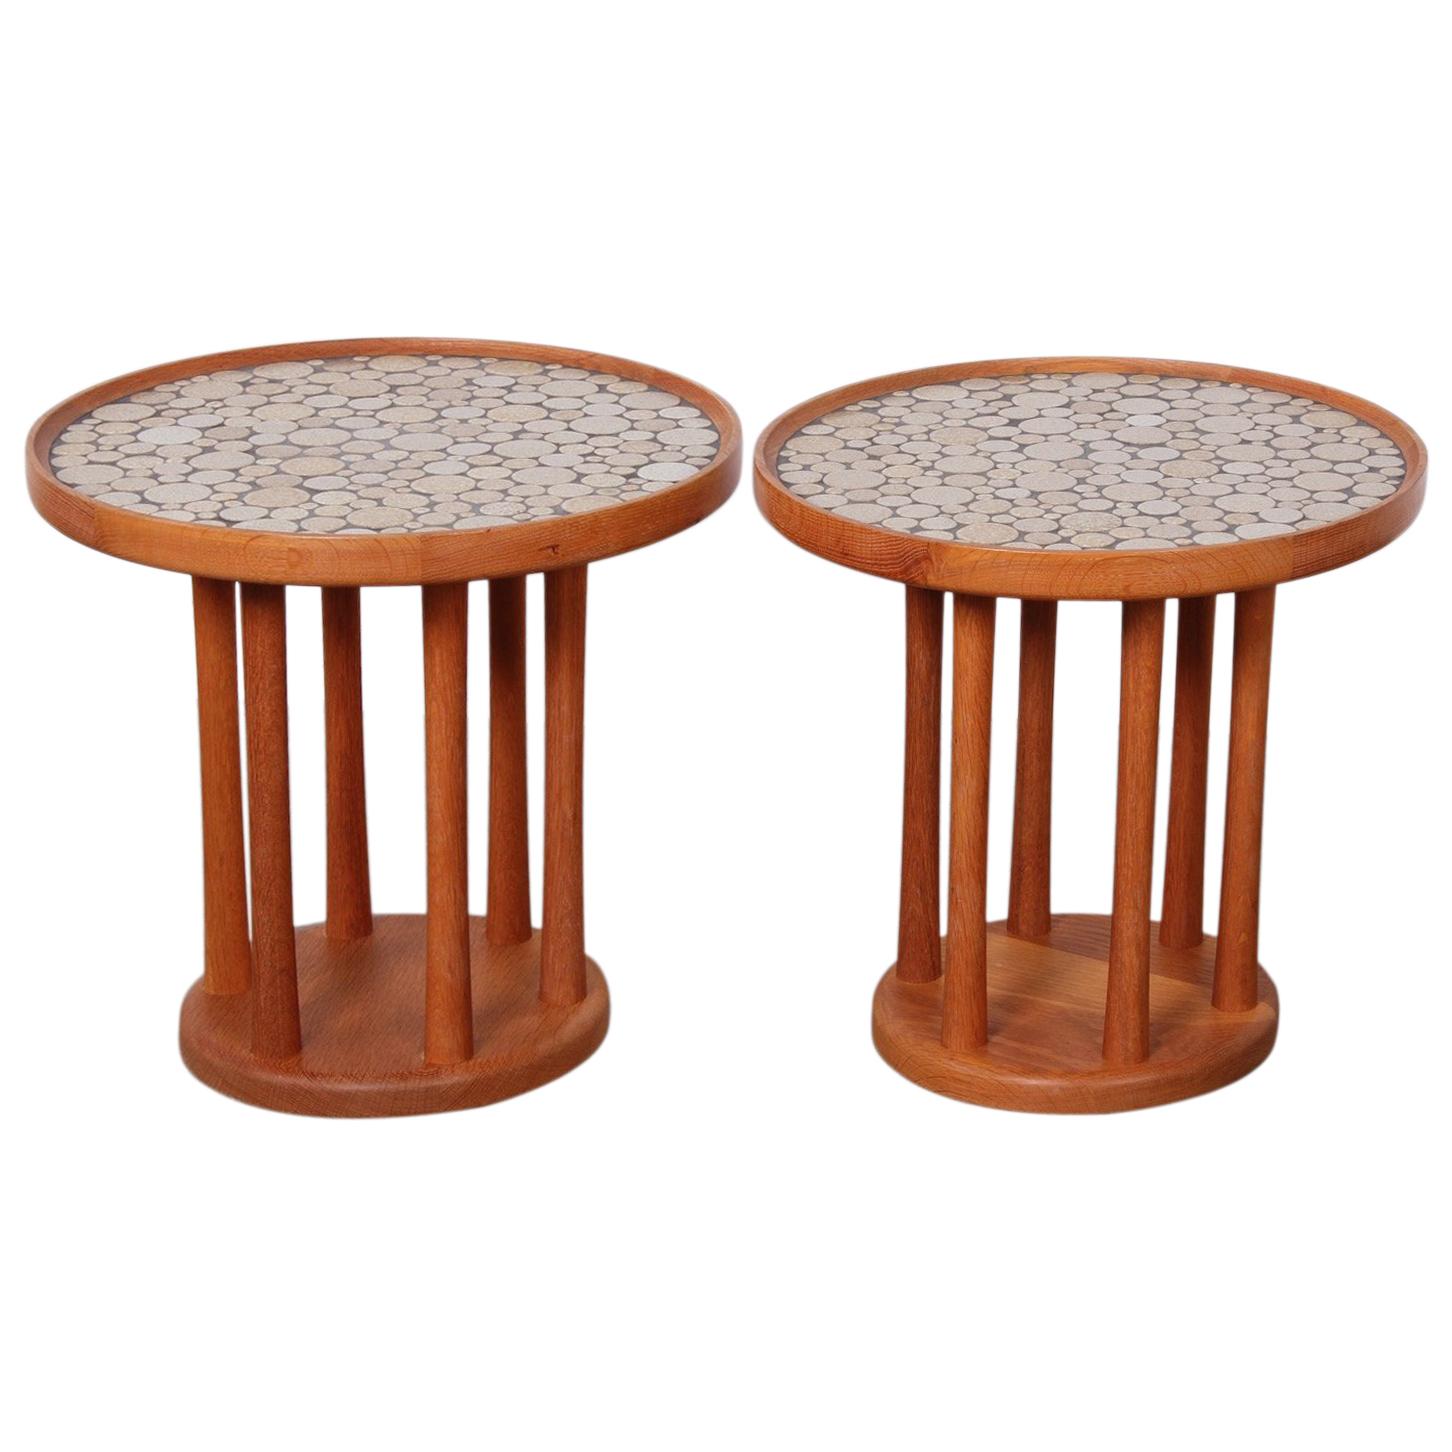 Pair of Tile Tables by Gordon Martz